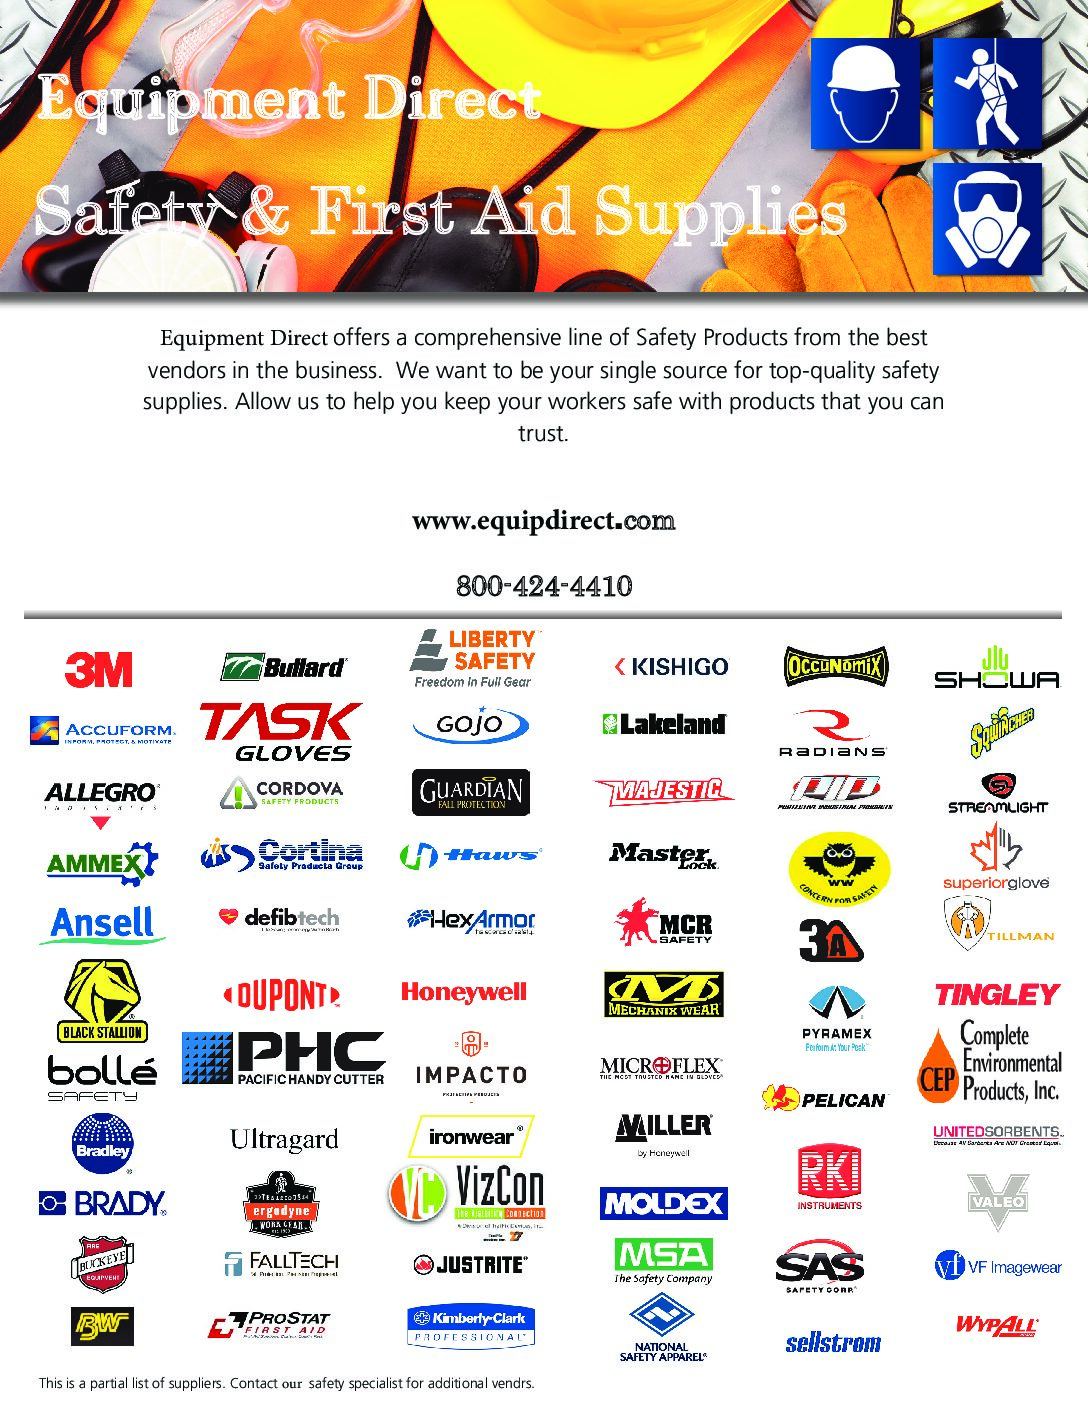 Manufactures - Brands